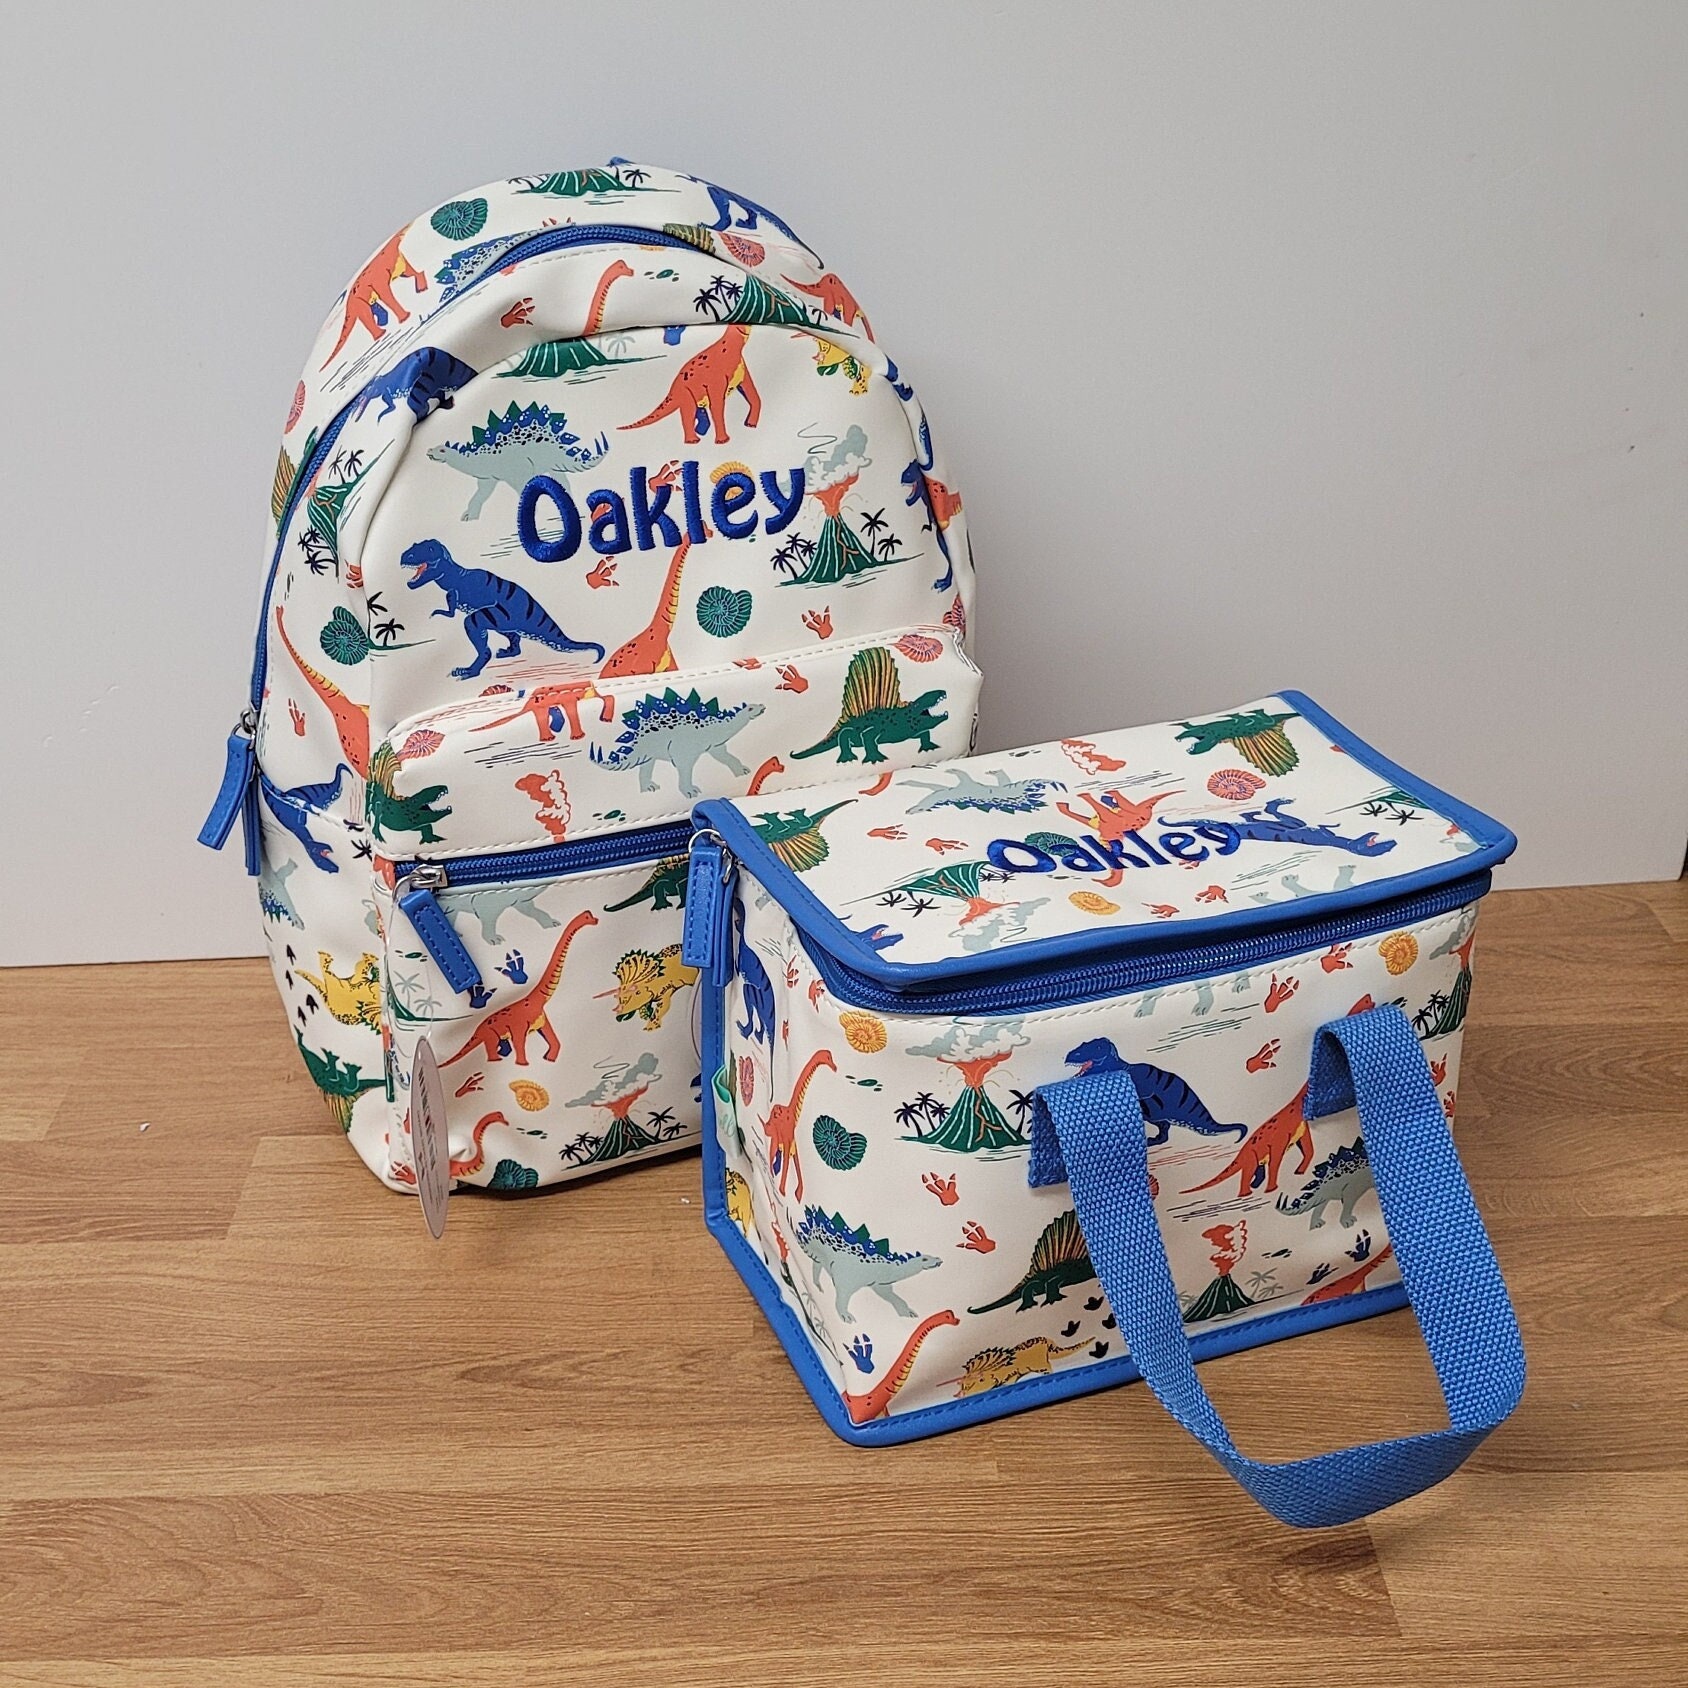 Nohoo Toddler Backpack, Kids Waterproof Backpack Funny Dinosaur Bookbag Travel Backpack for Boys Girls (Age 3 to 8)